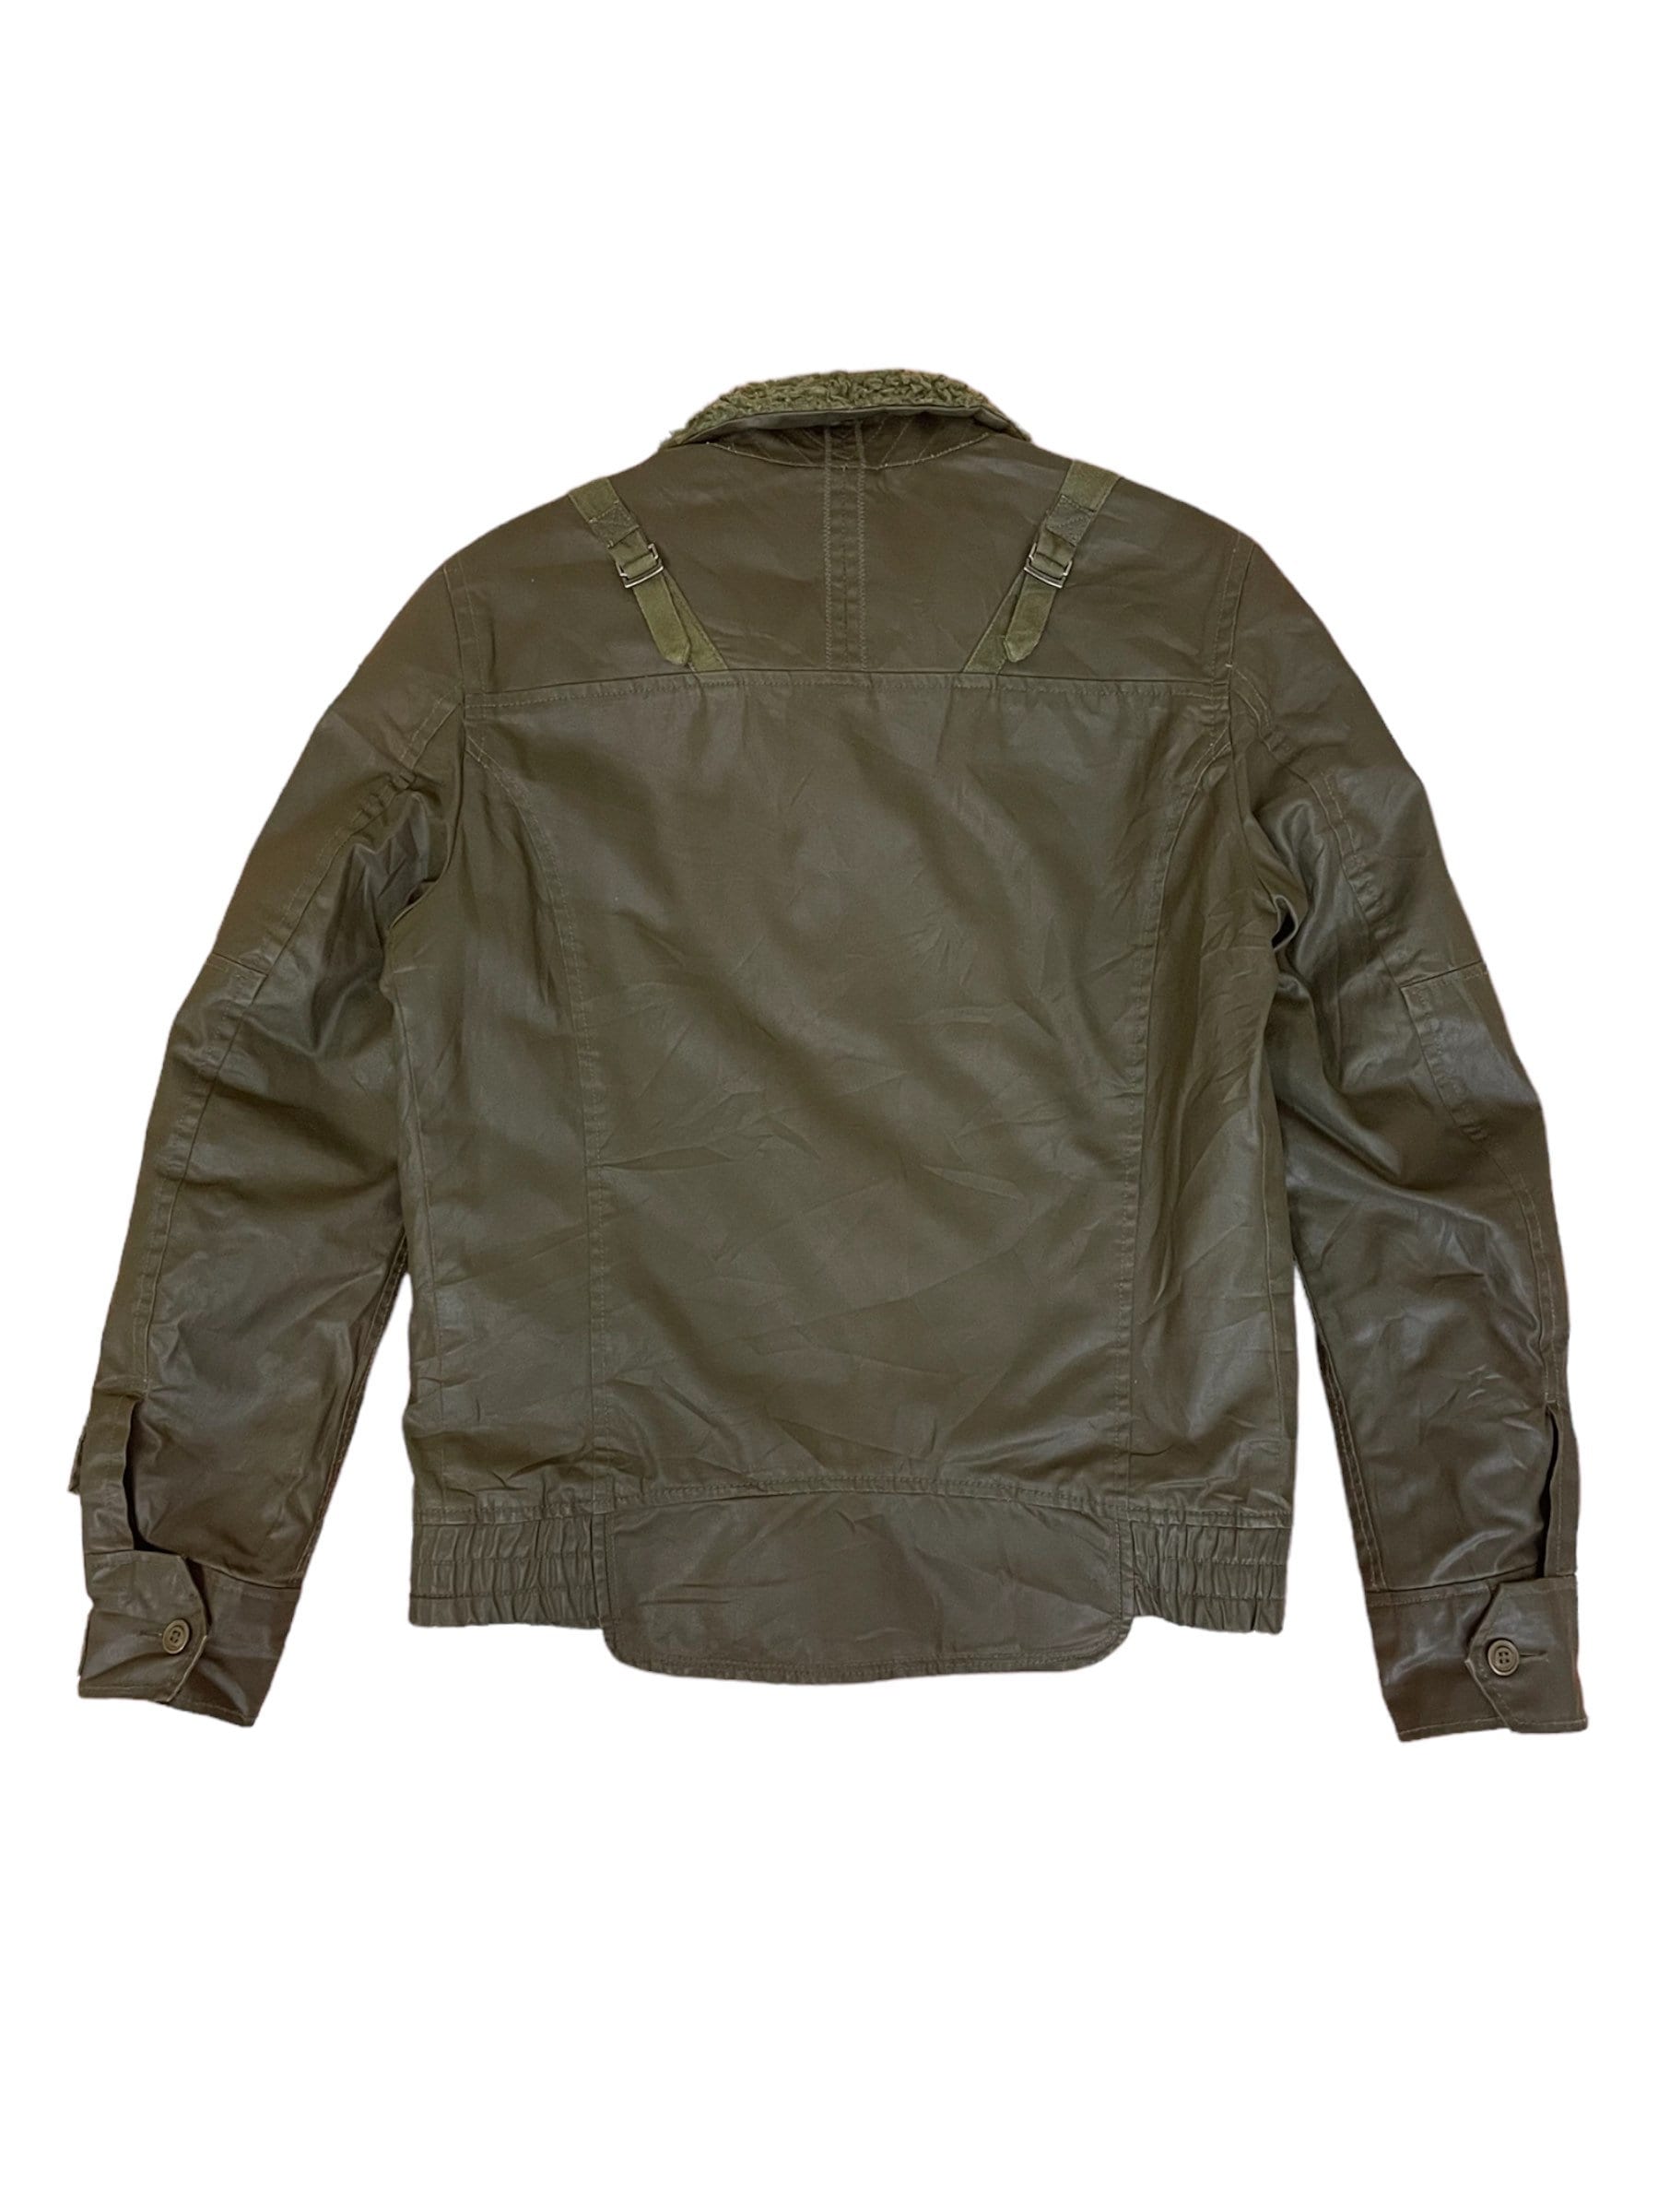 Rare Diesel Jacket Milytary Style Jacket Winter Jacket Multiple Pocket  Activewear Streetwear -  Canada